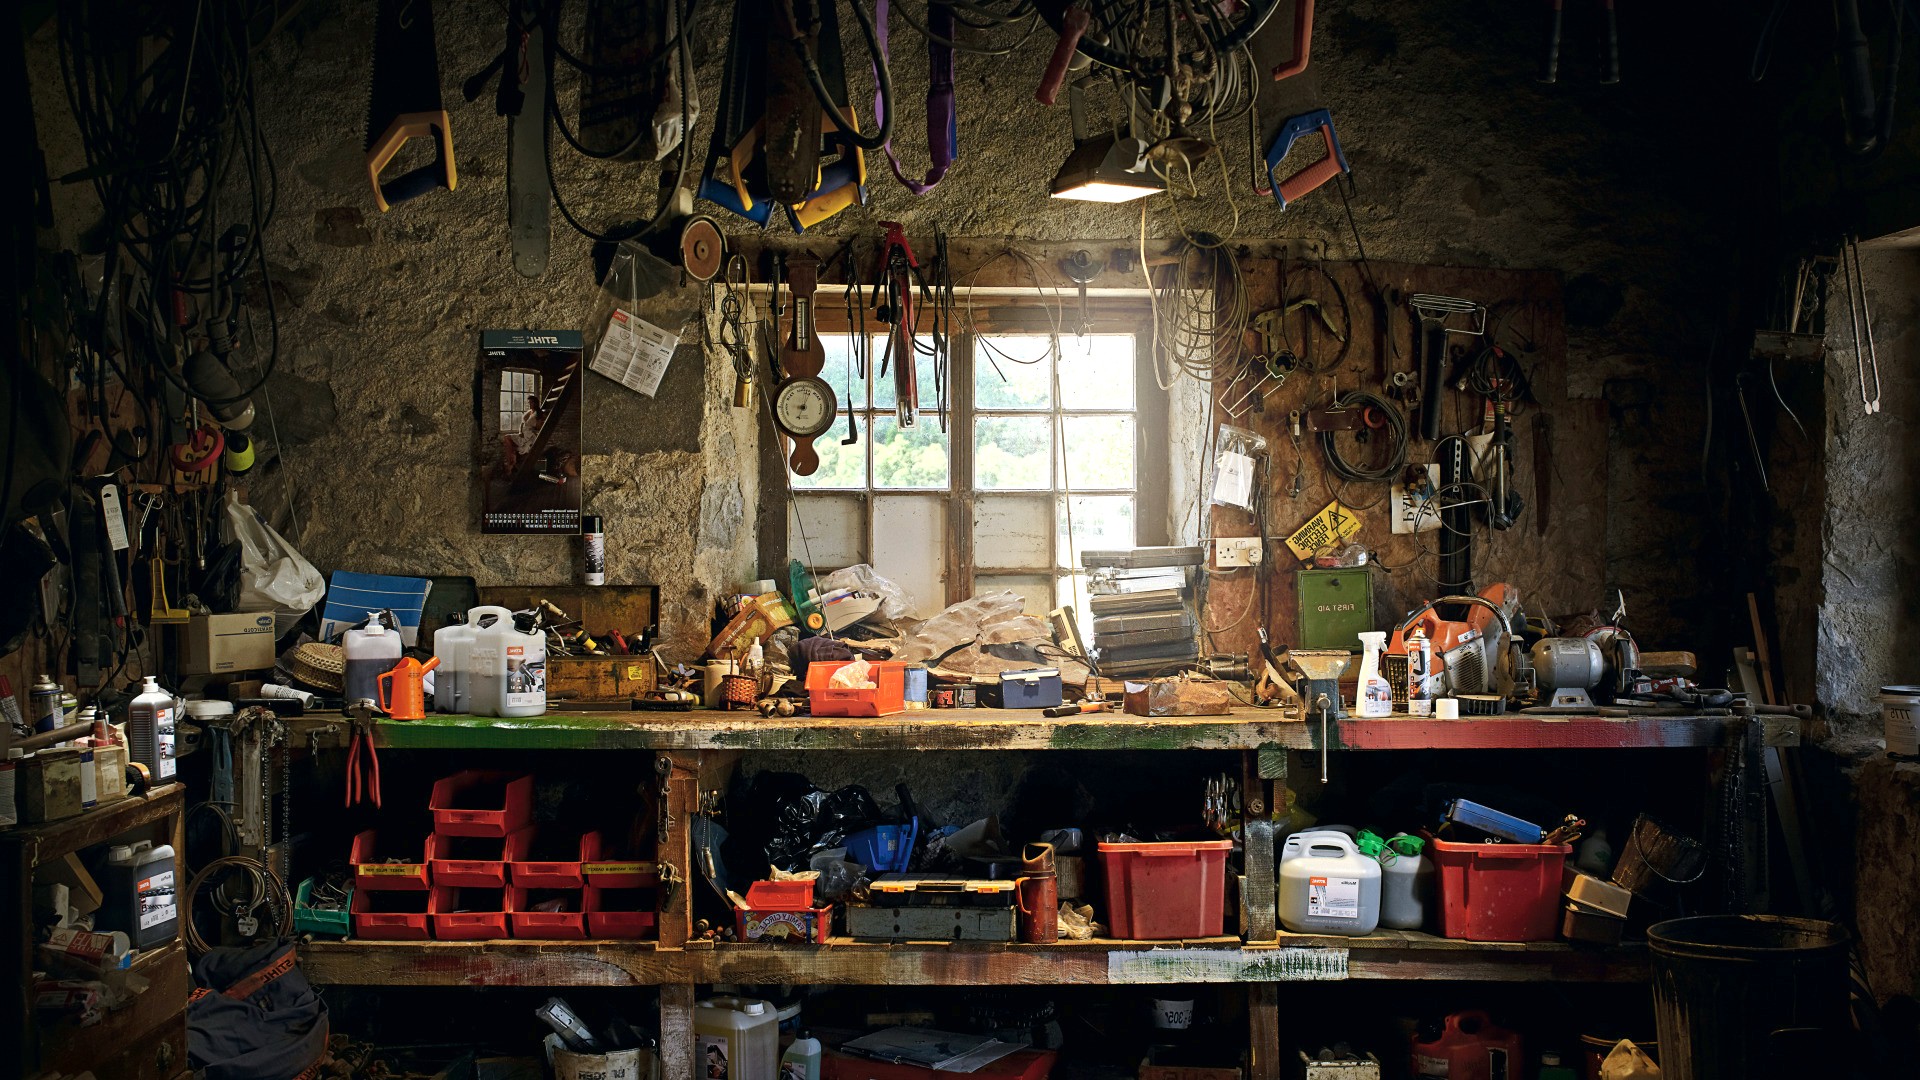 picture: narzędzia, okno, warsztat (image)